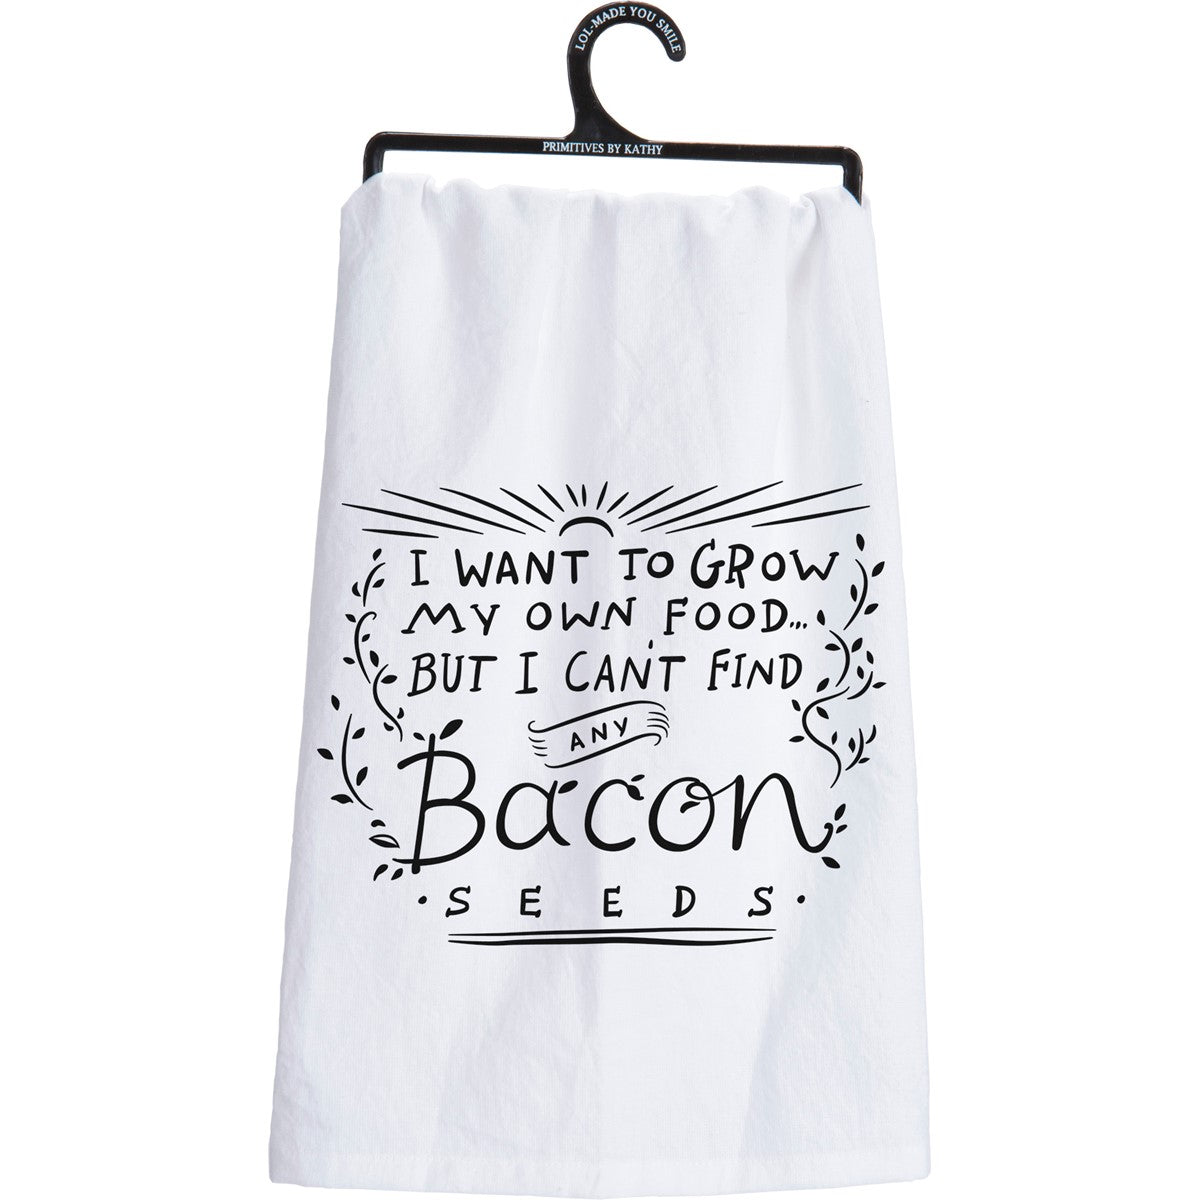 "BACON SEEDS" DISH TOWEL